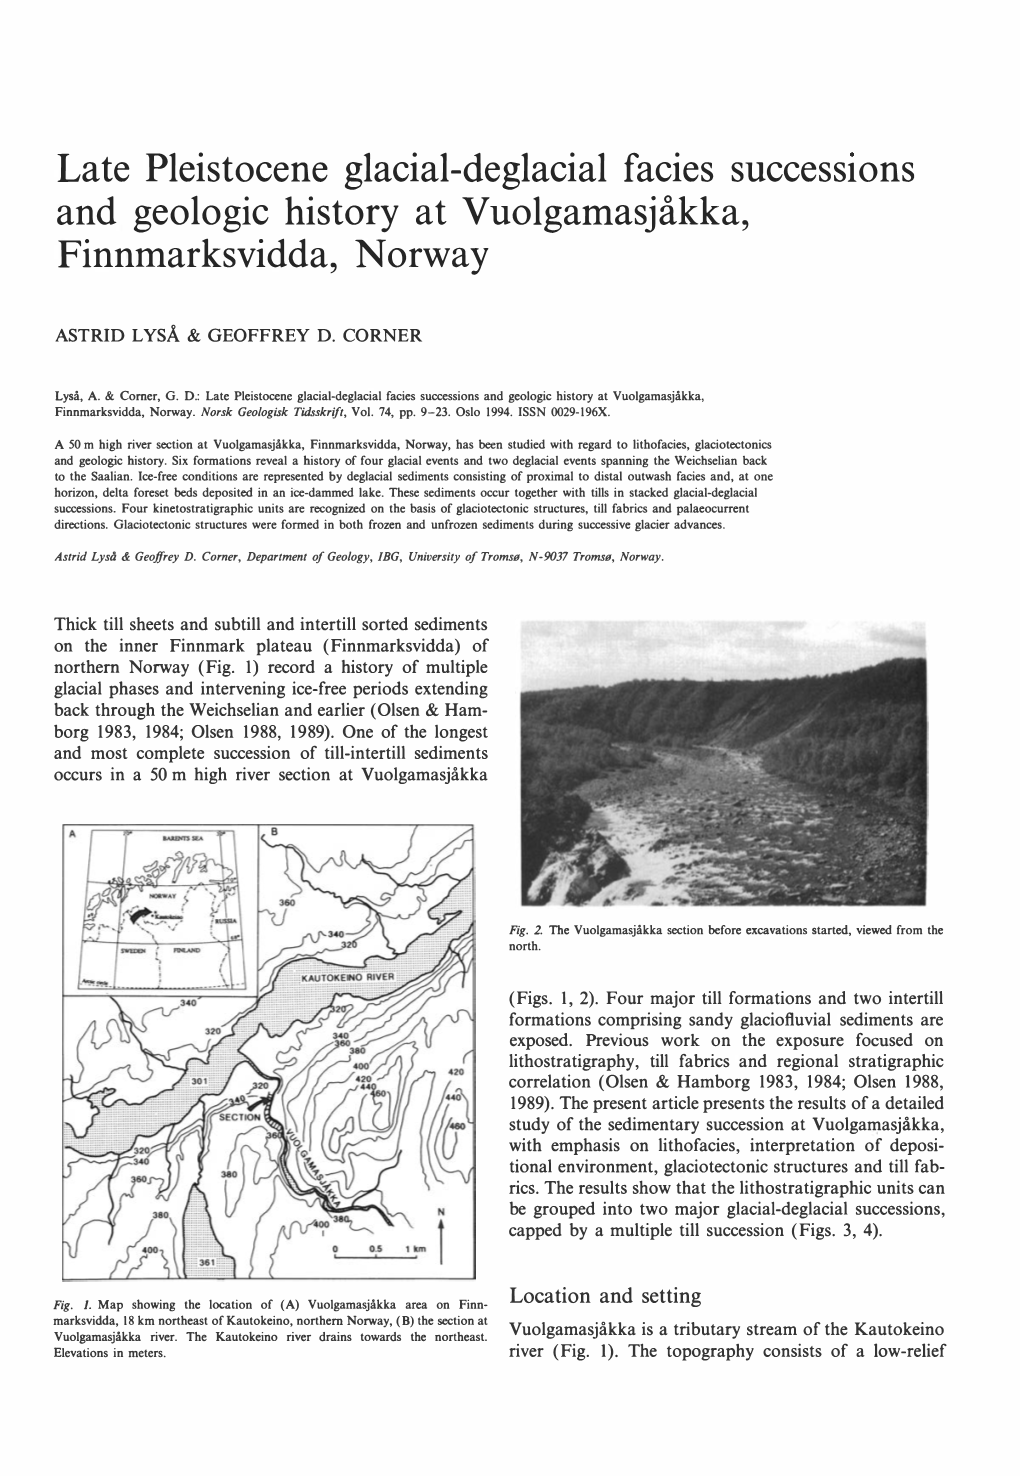 Late Pleistocene Glacial-Deglacial Facies Success1ons and Geologic History at Vuolgamasjåkka, Finnmarksvidda, Norway